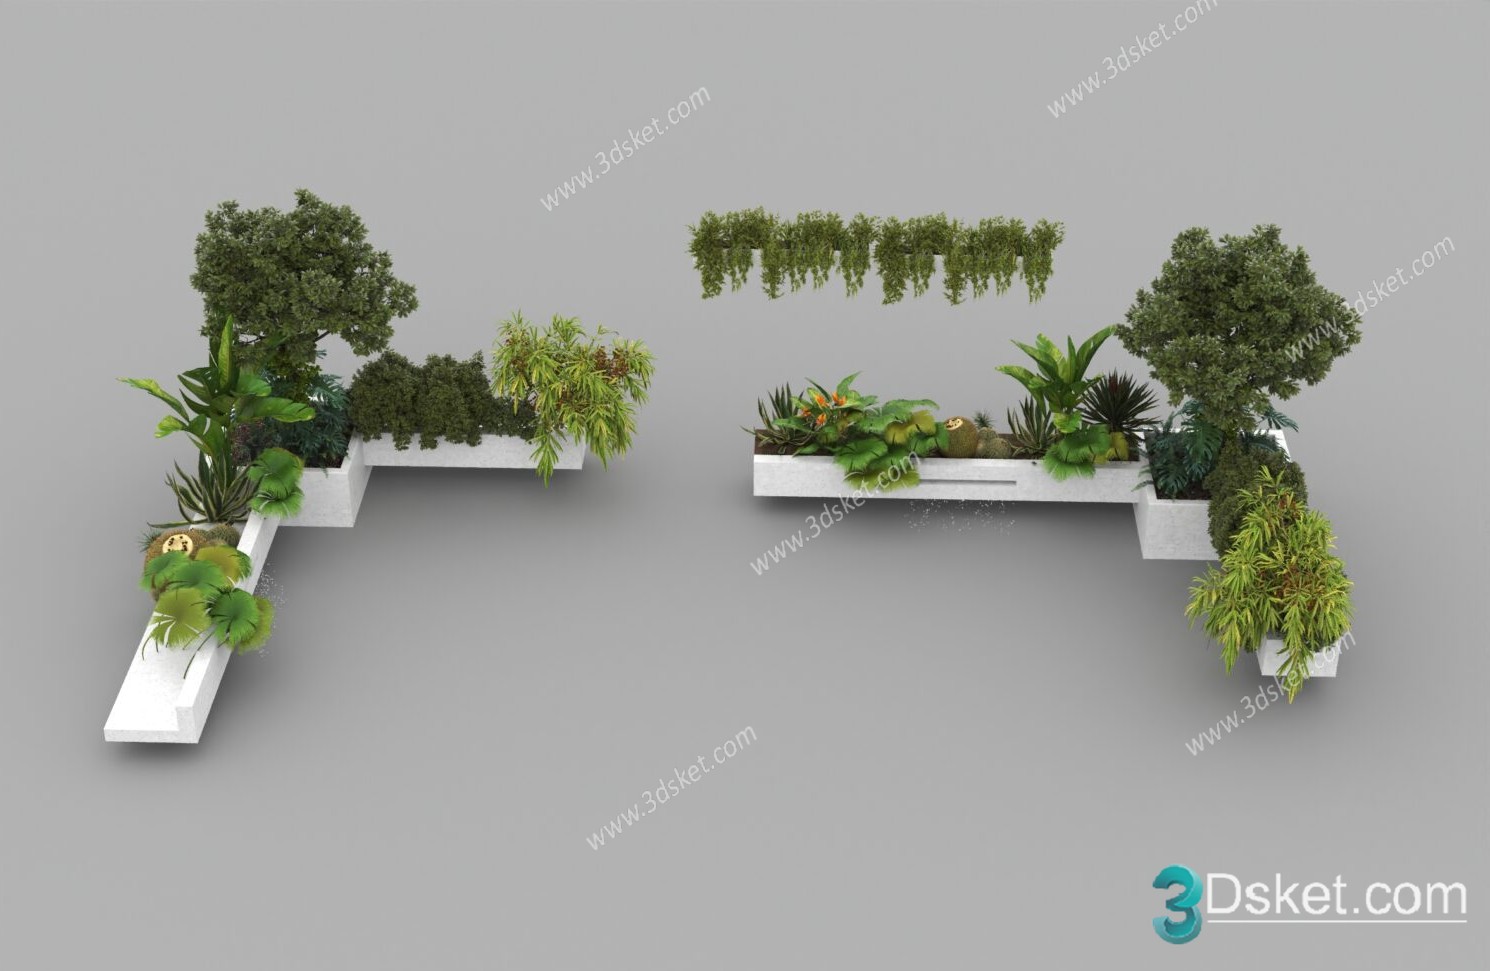 3D Model Tree Free Download T045